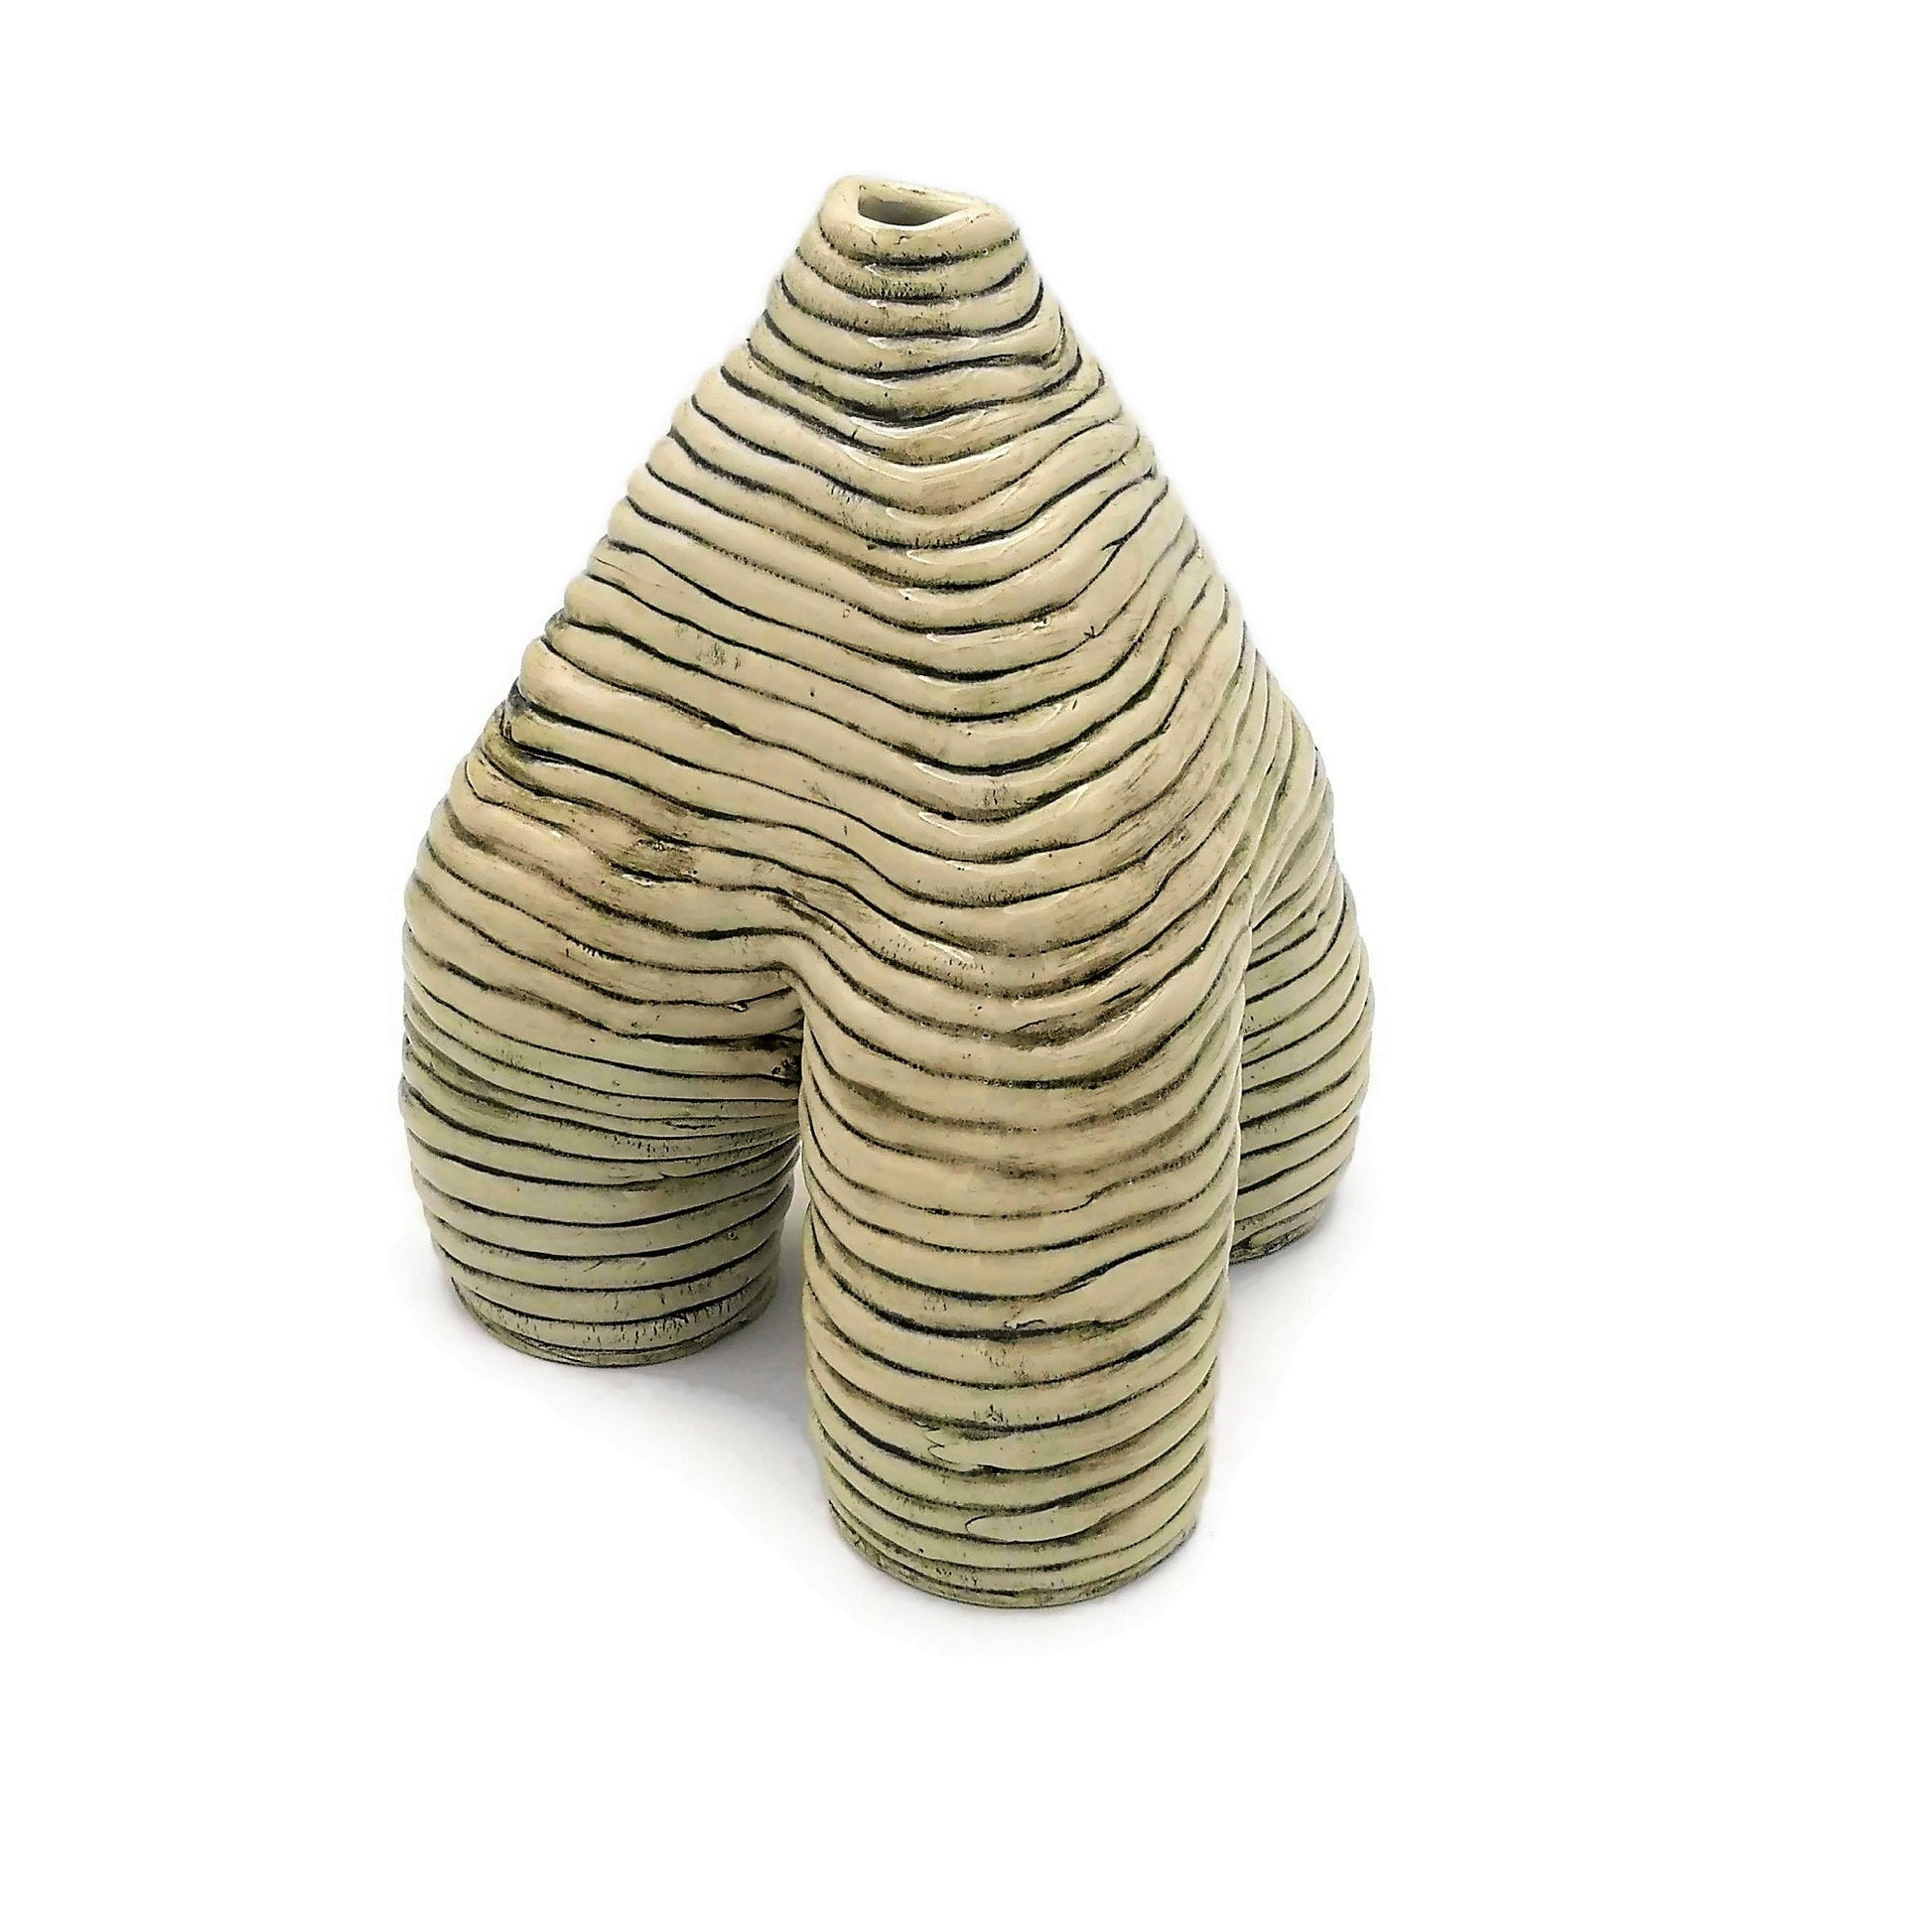 Handmade Ceramic Sculpture, Contemporary Art Abstract, Textured Sculptural Vase For Table, Mid Century Modern Sculpture, Custom Wedding Gift - Ceramica Ana Rafael